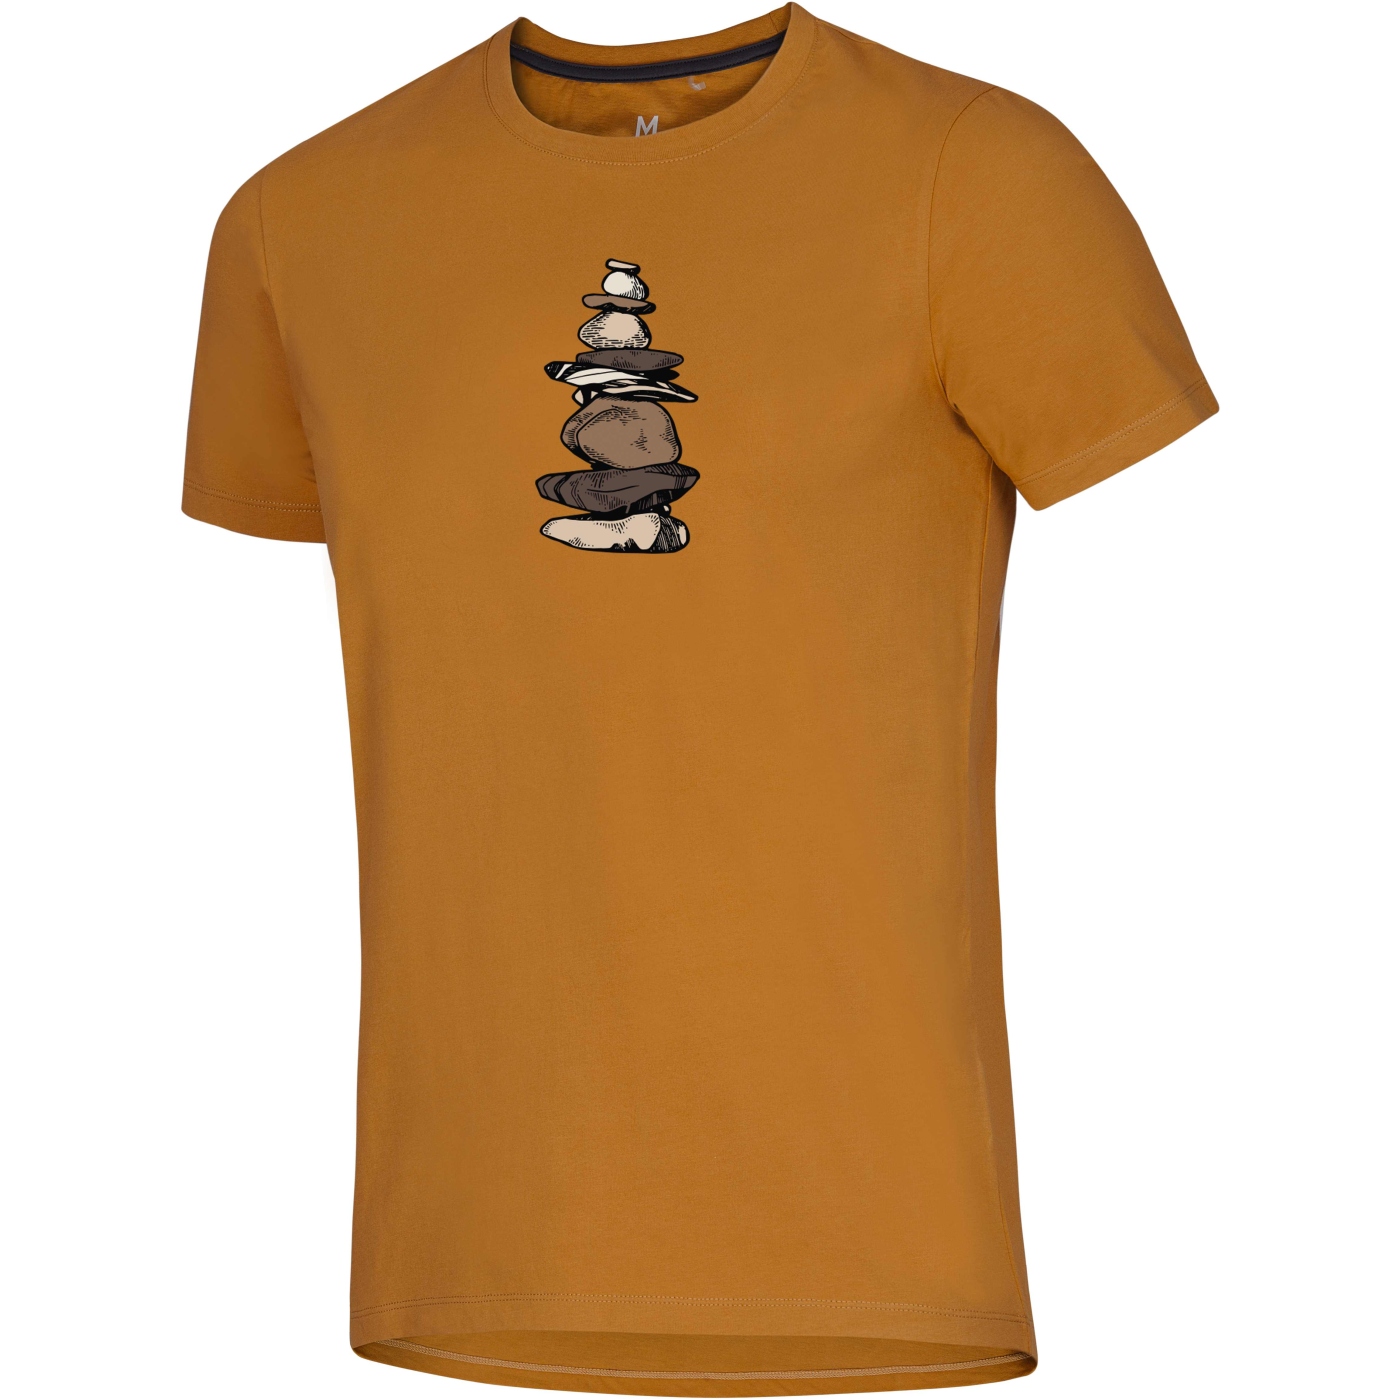 Bild von Ocún Classic T - T-Shirt Herren - Stoneman - Brown Bronze